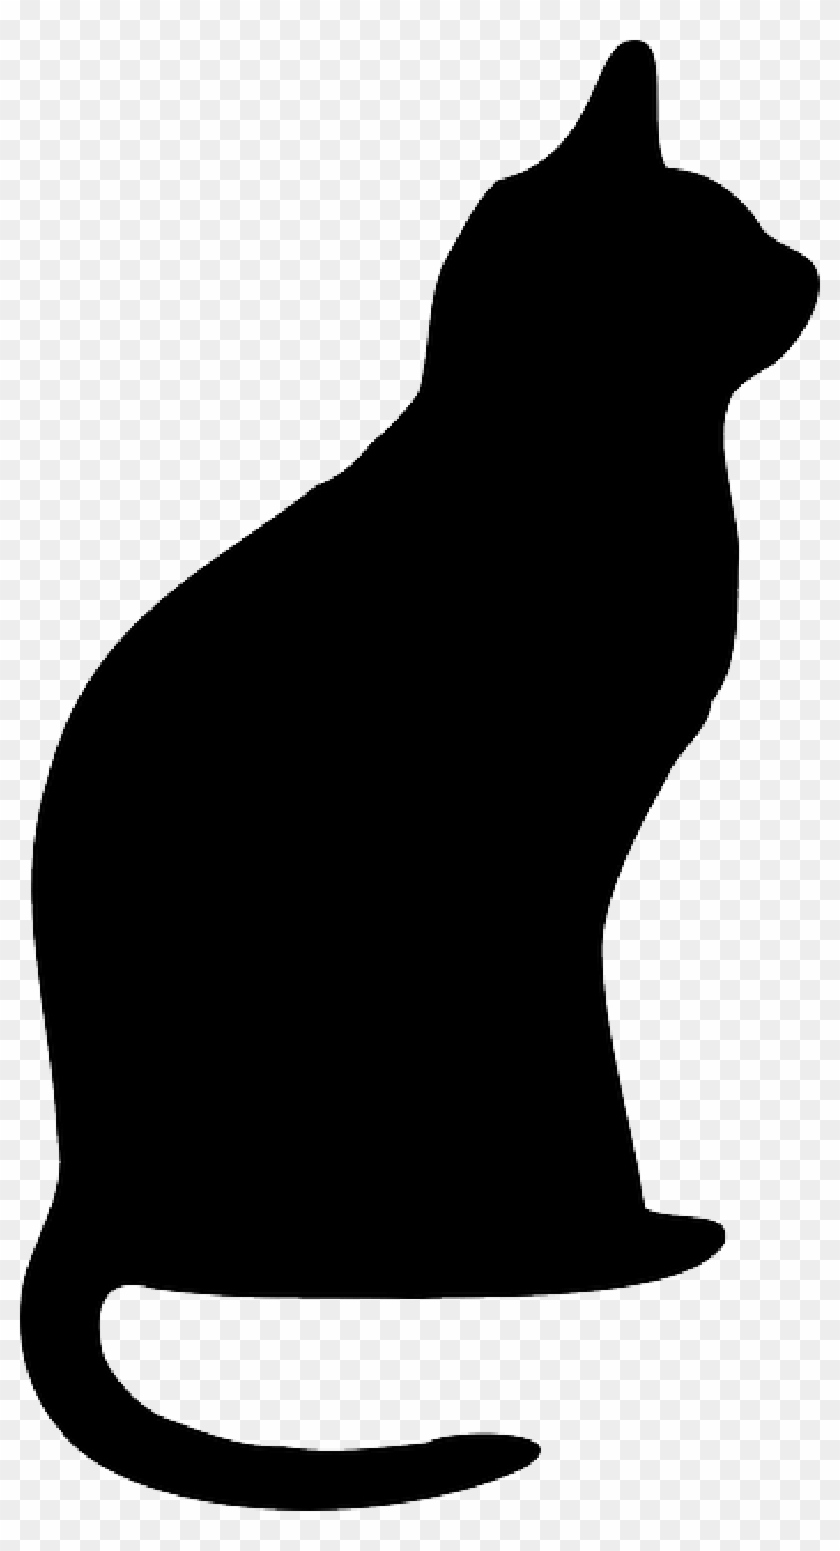 Cat, Halloween, Black, Silhouette, Spooky, Animal, - Cat Silhouette Clip Art #259592